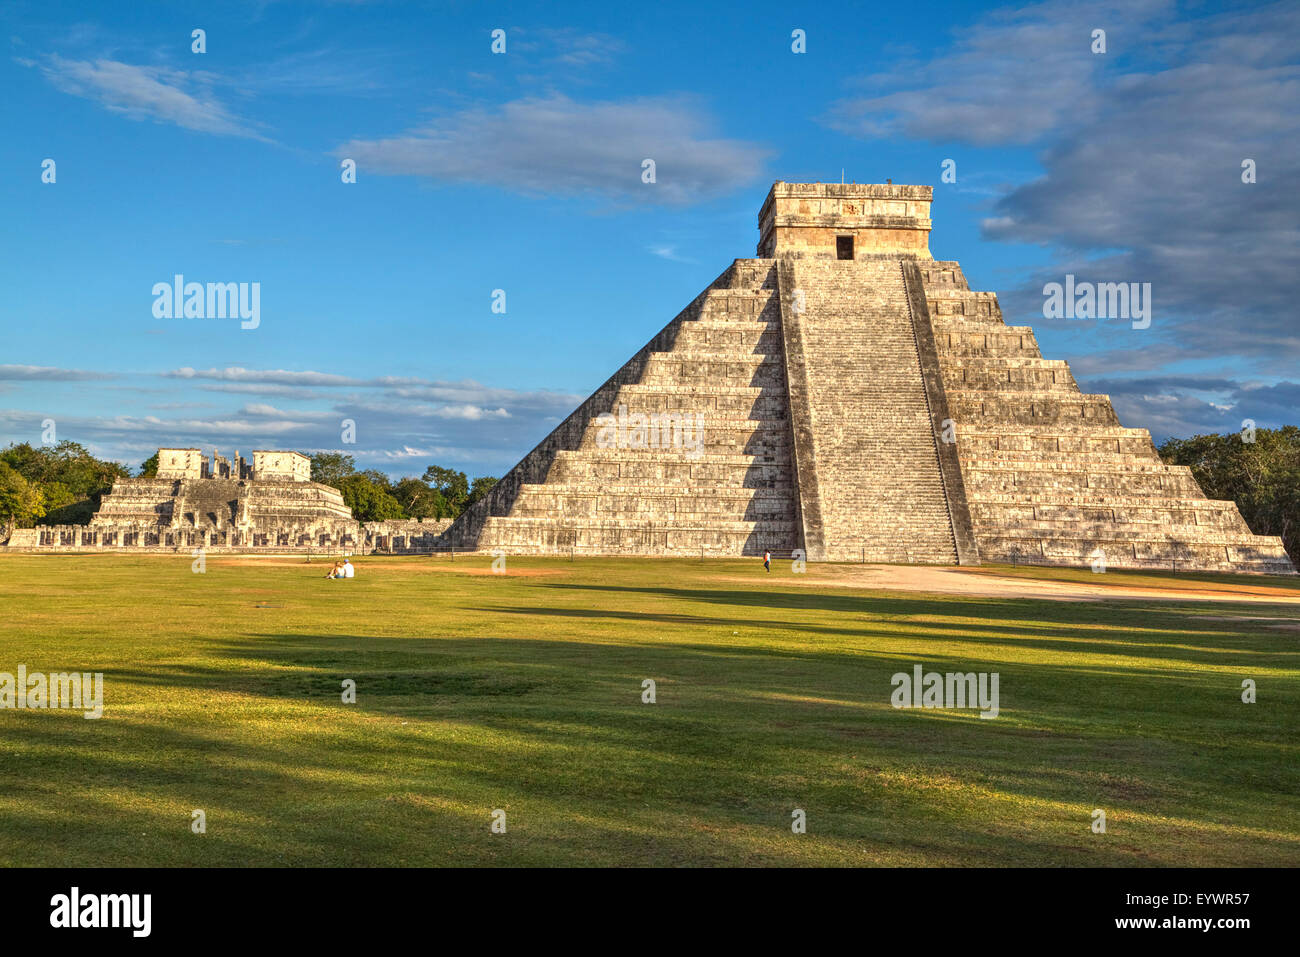 El Castillo (Pyramide von Kulkulcan), Chichen Itza, UNESCO World Heritage Site, Yucatan, Mexiko, Nordamerika Stockfoto